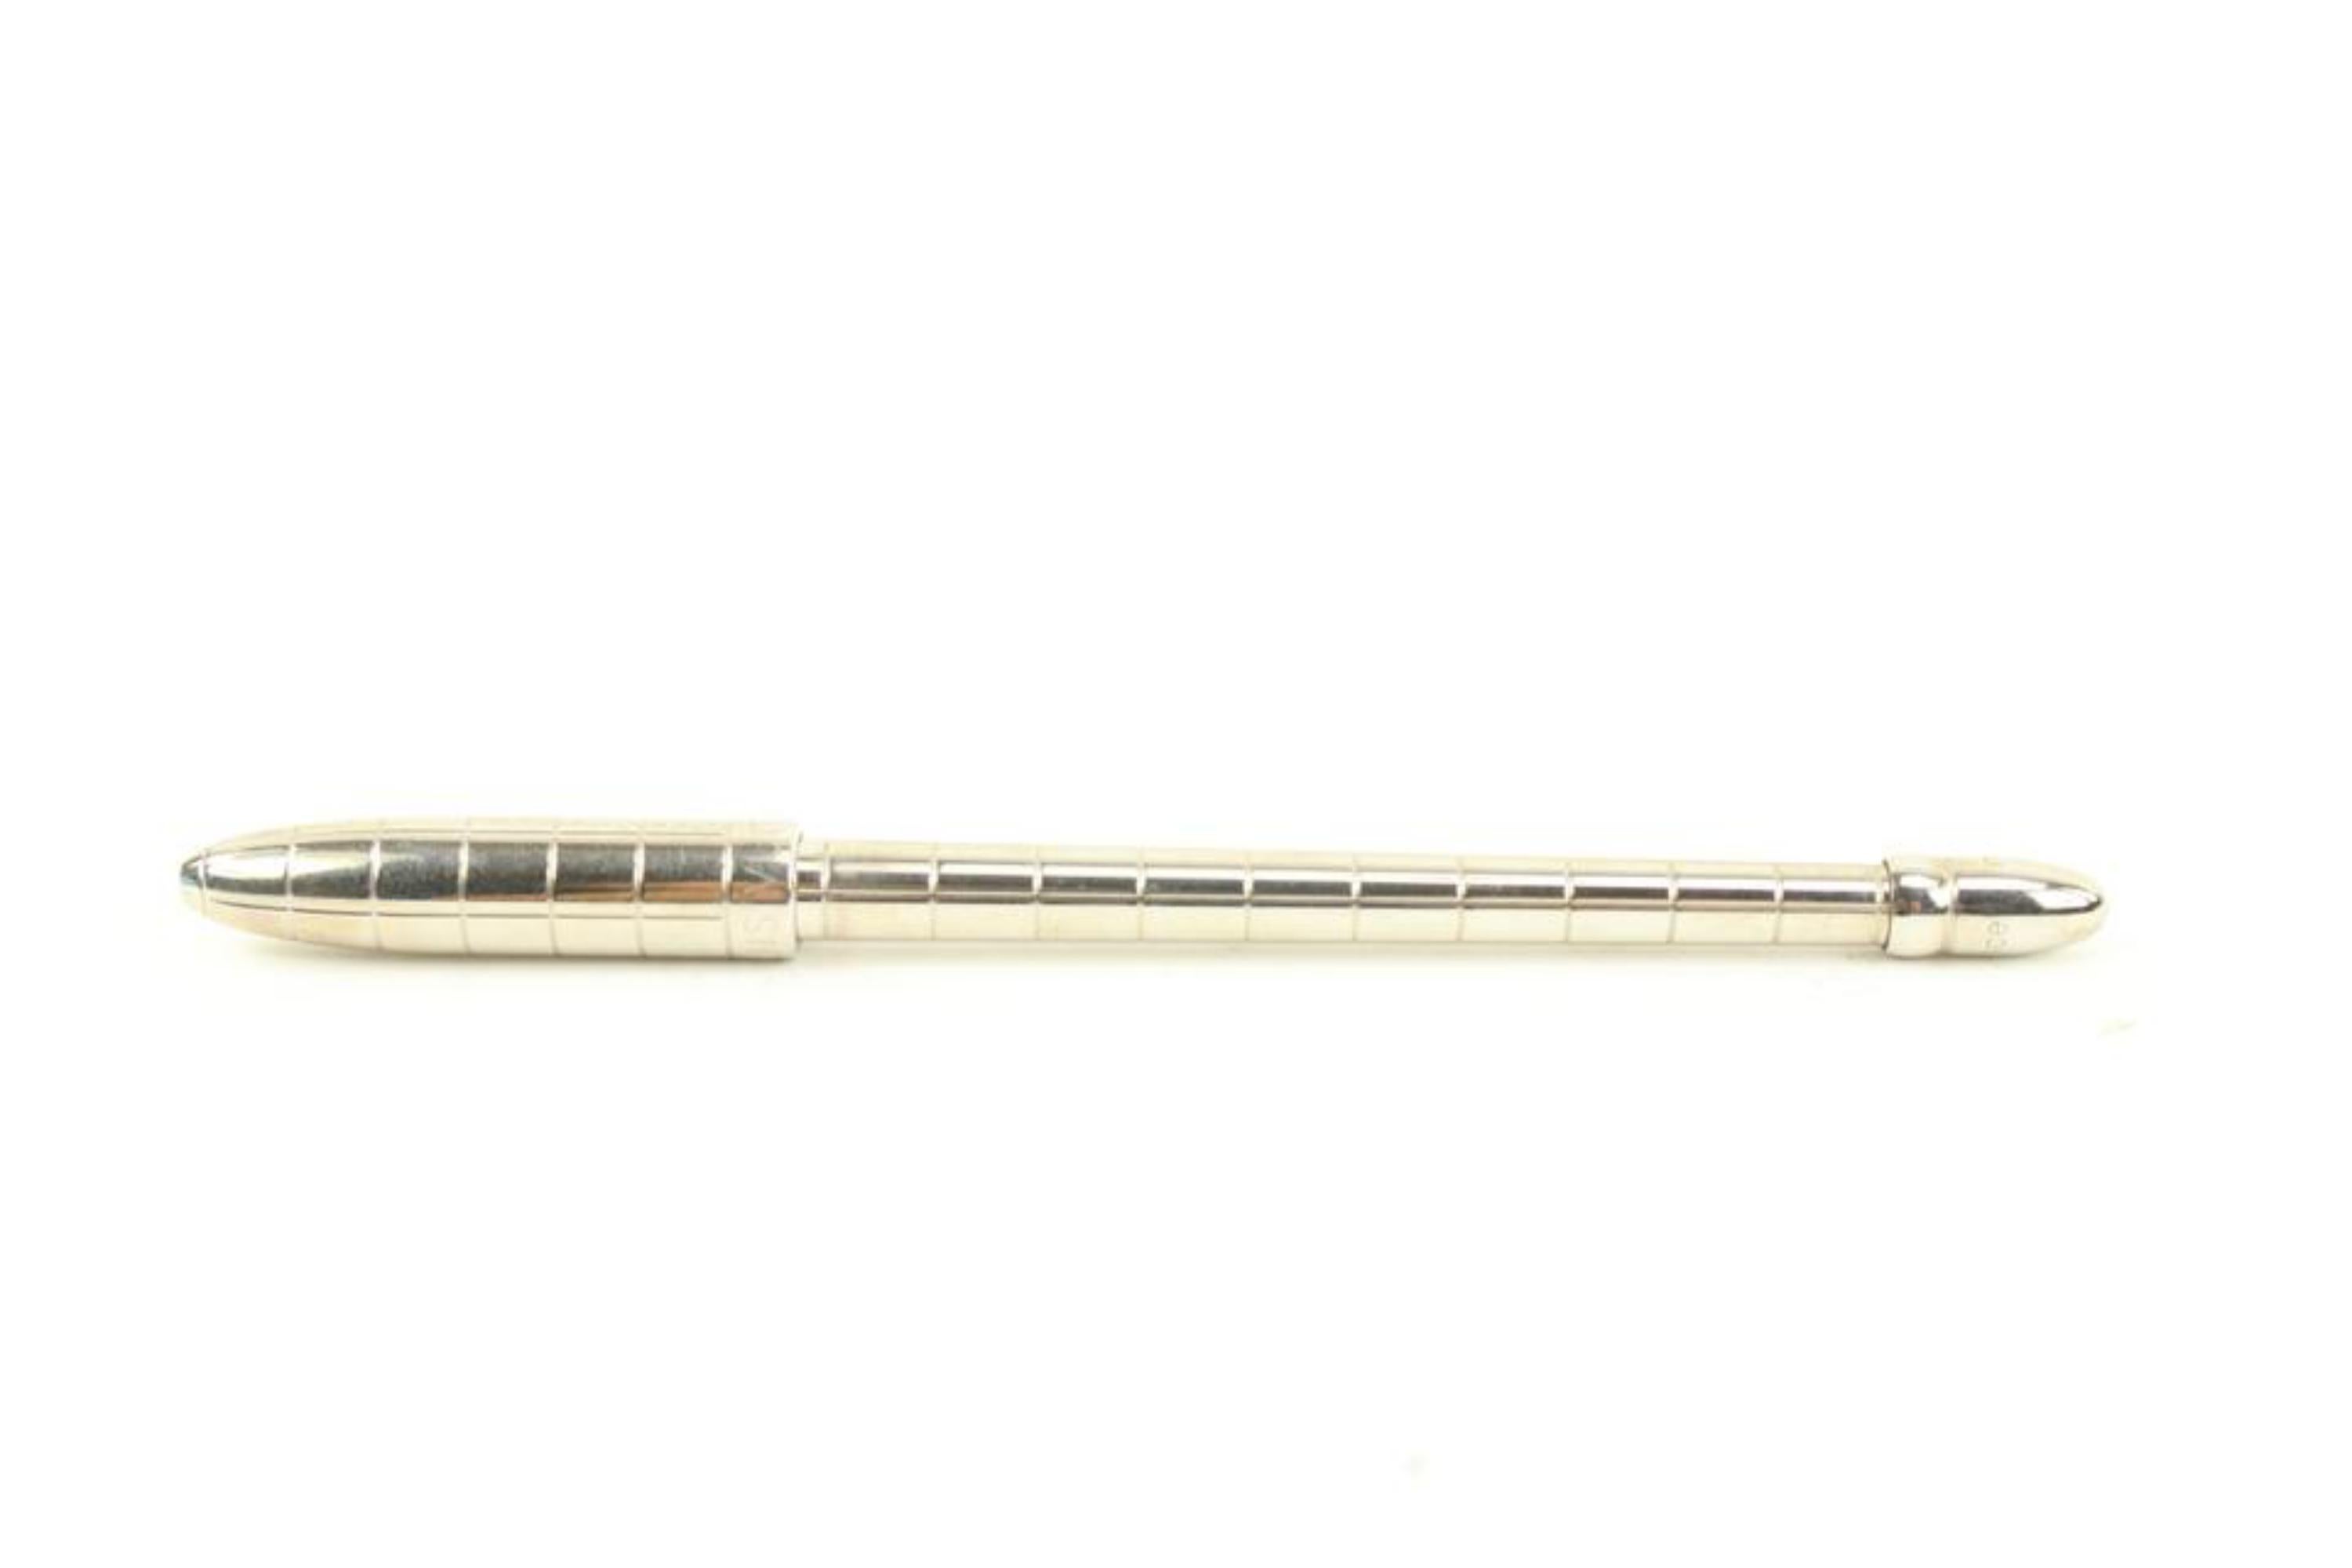 Louis Vuitton Silver Tone Ball Point Stylo Pen gret for Agenda  s214lv86 1